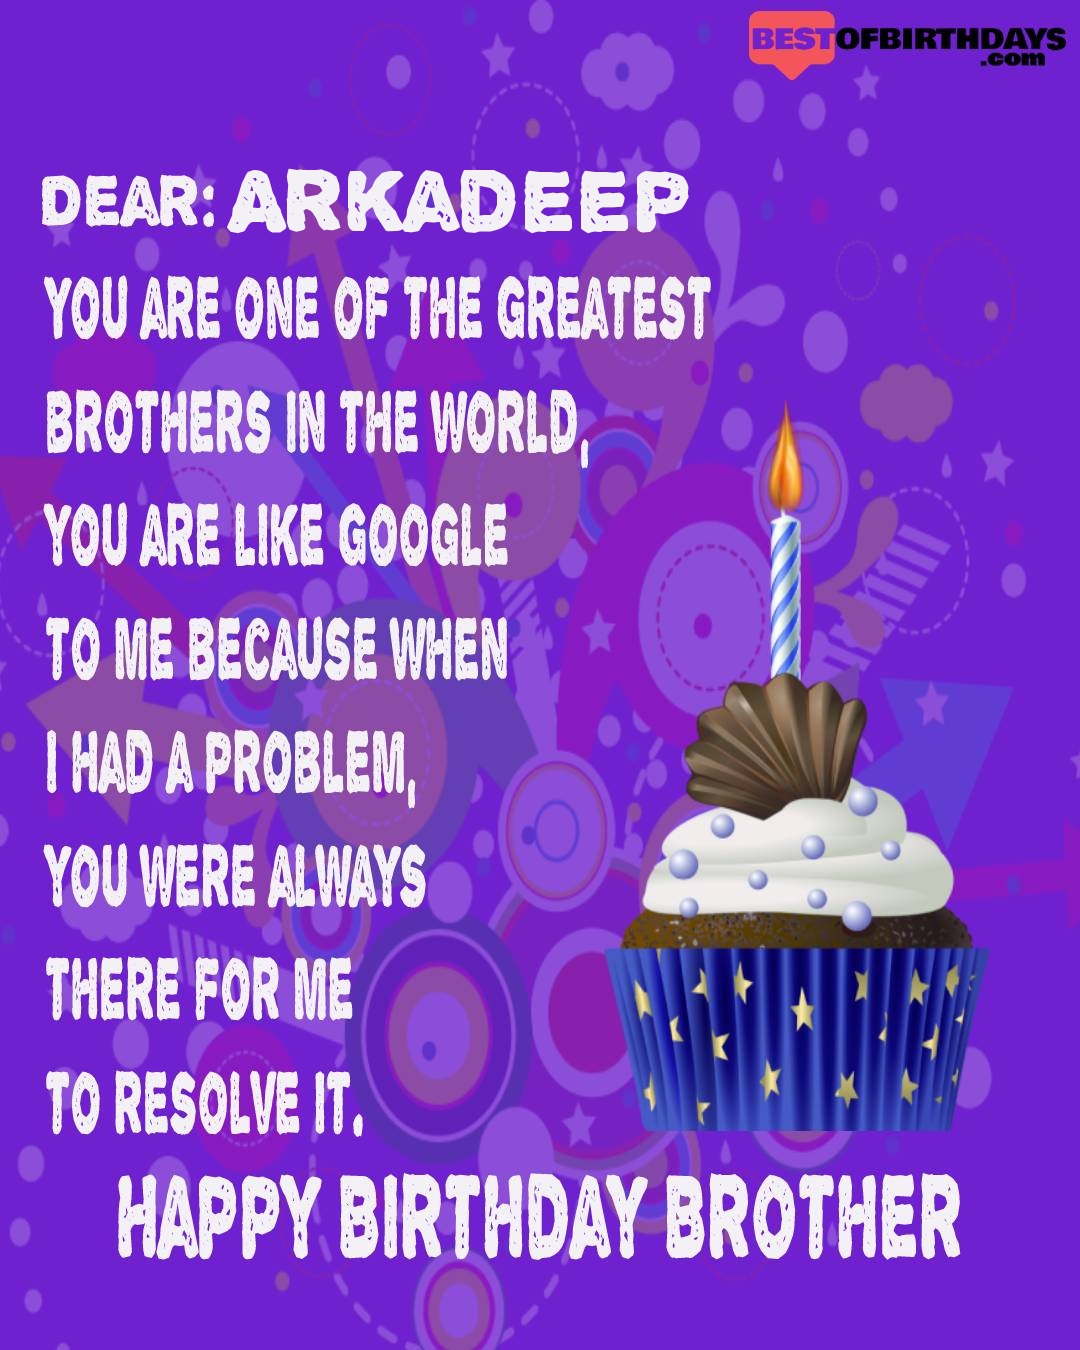 Happy birthday arkadeep bhai brother bro